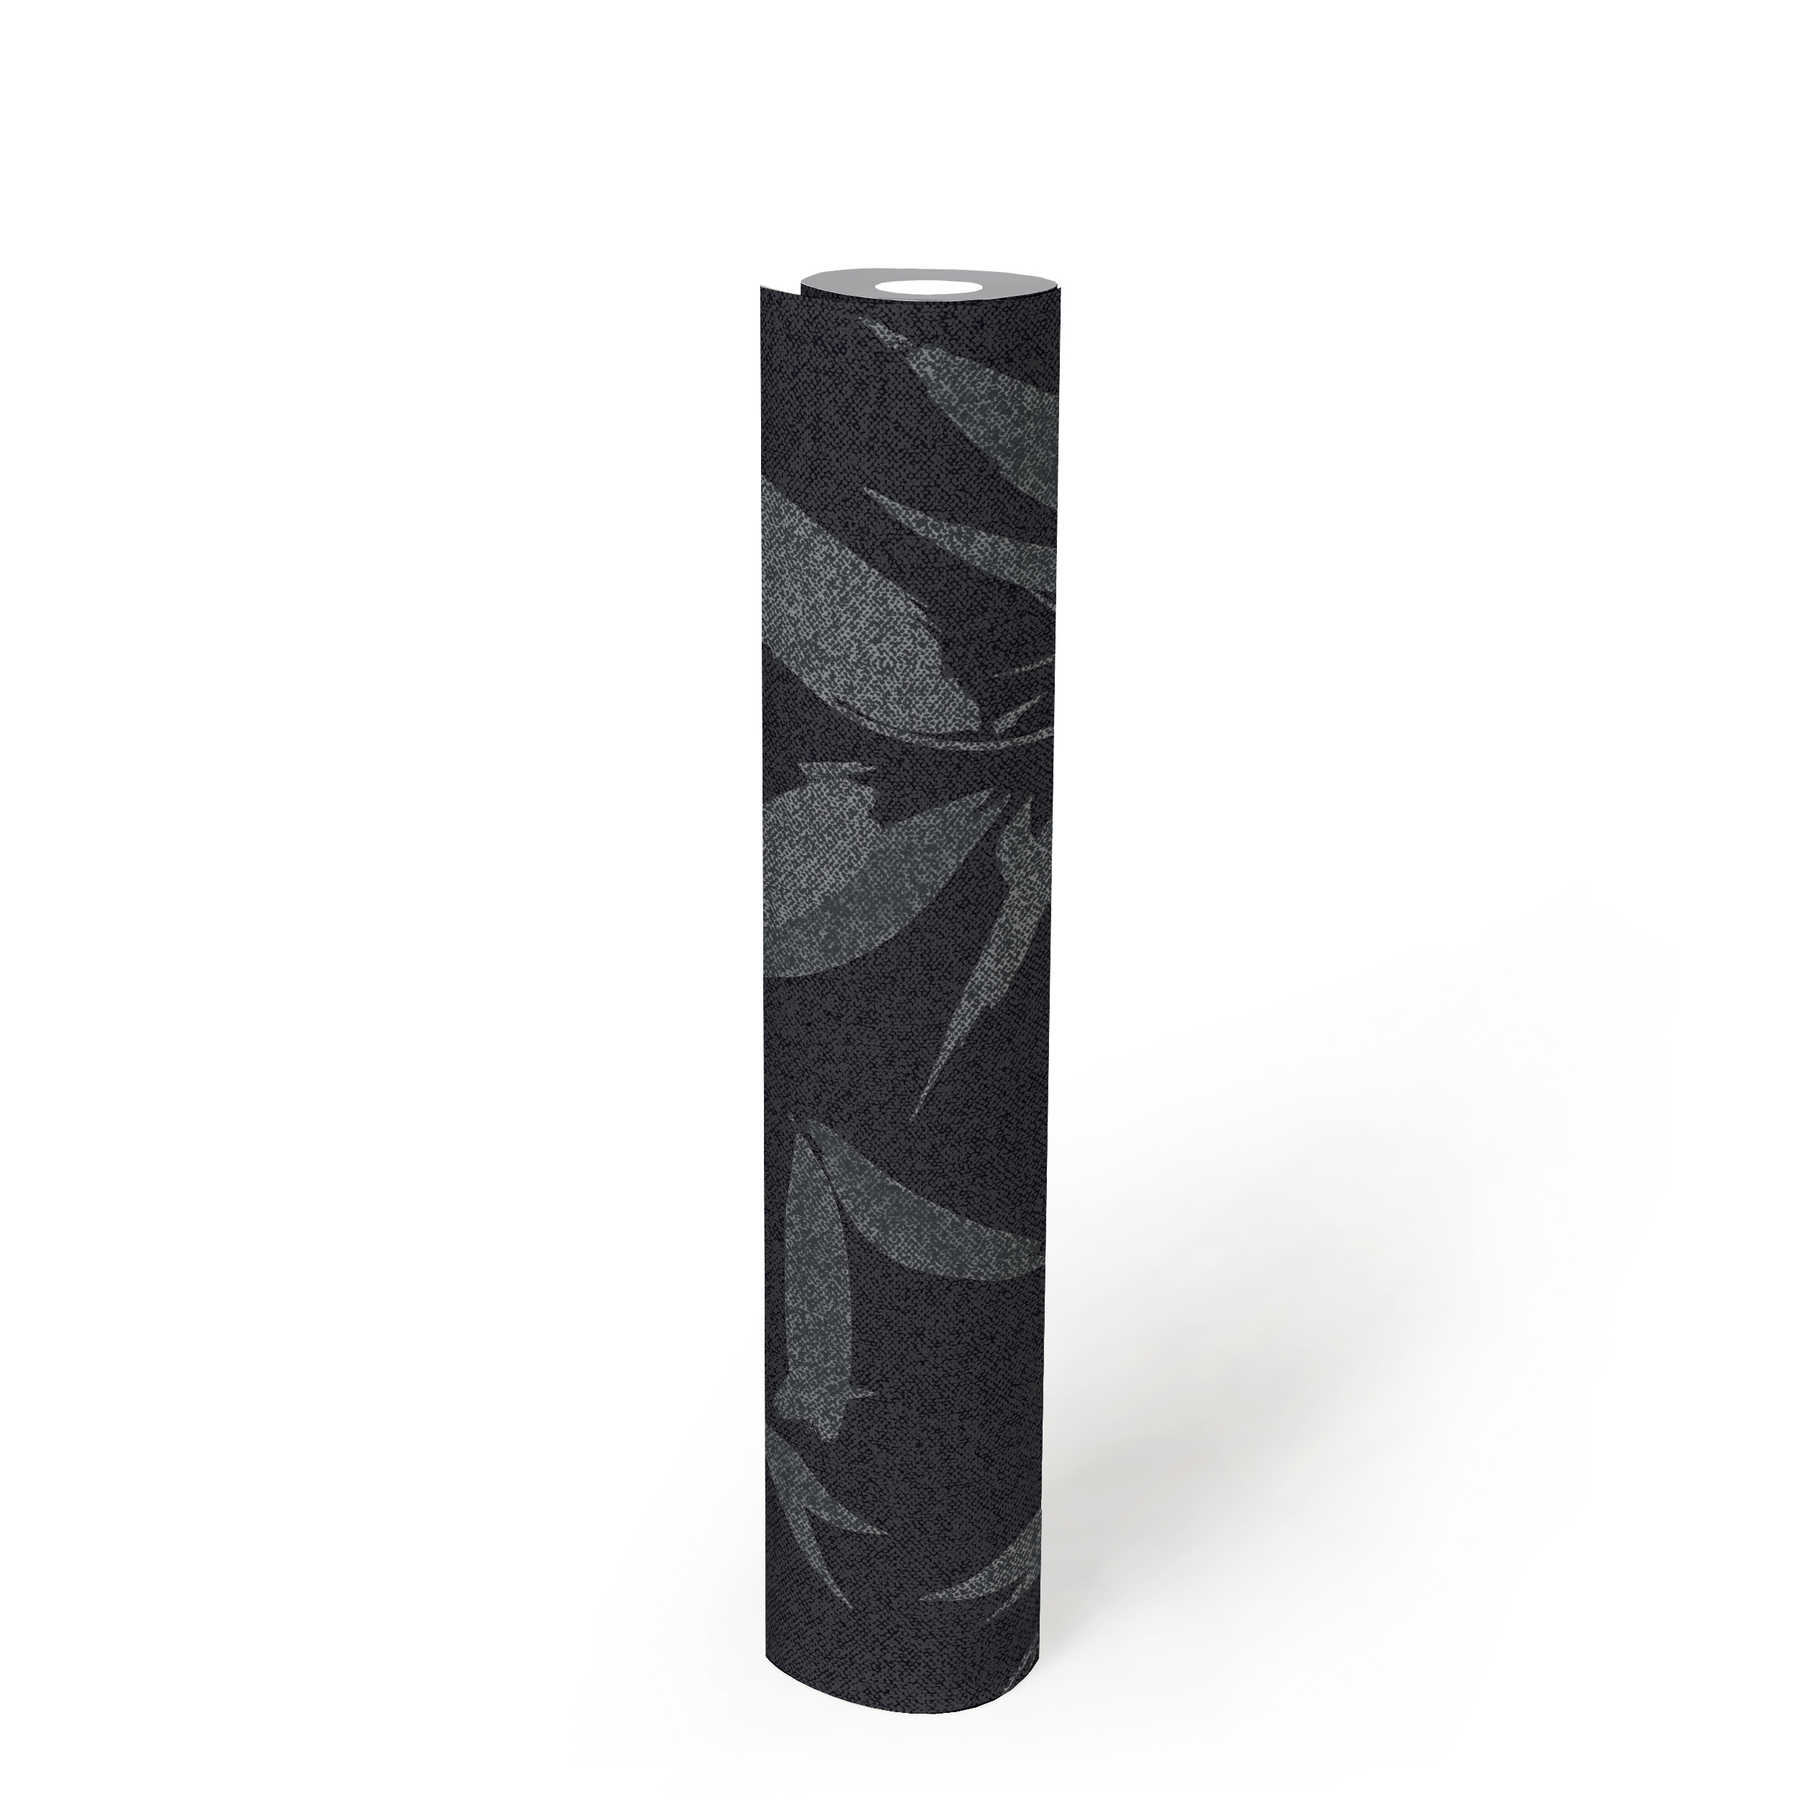             Papel pintado abstracto de hojas con óptica textil - negro, gris
        